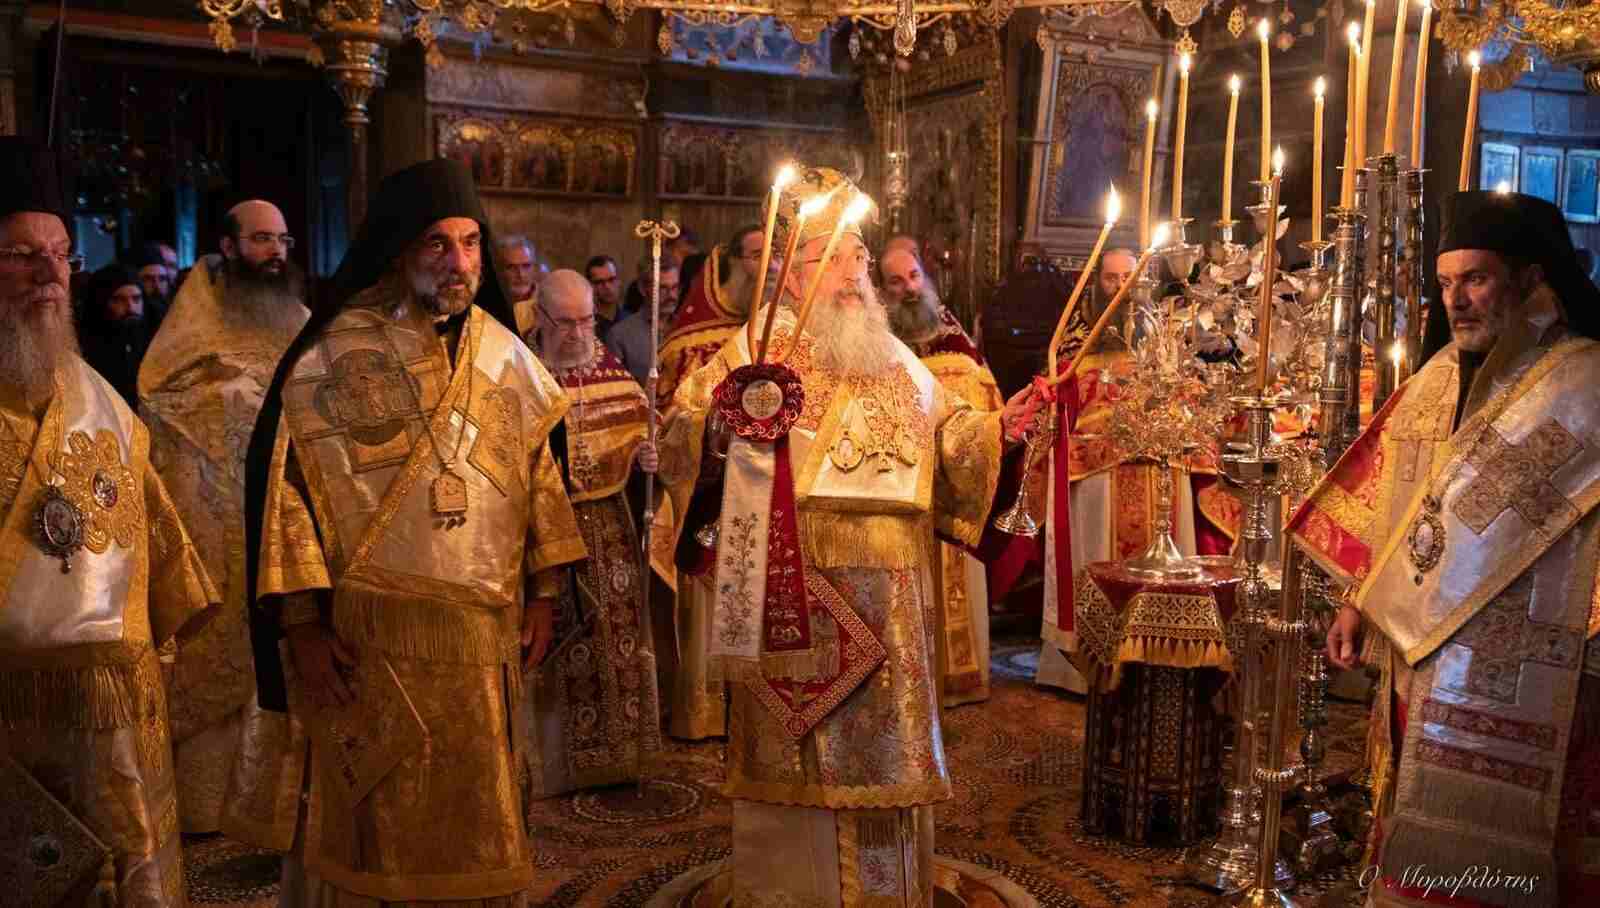 You are currently viewing Το Άγιον Όρος επισκέφθηκε ο Αρχιεπίσκοπος Κρήτης Ευγένιος για την εορτή της Παναγίας ( με το παλαιό εορτολόγιο)